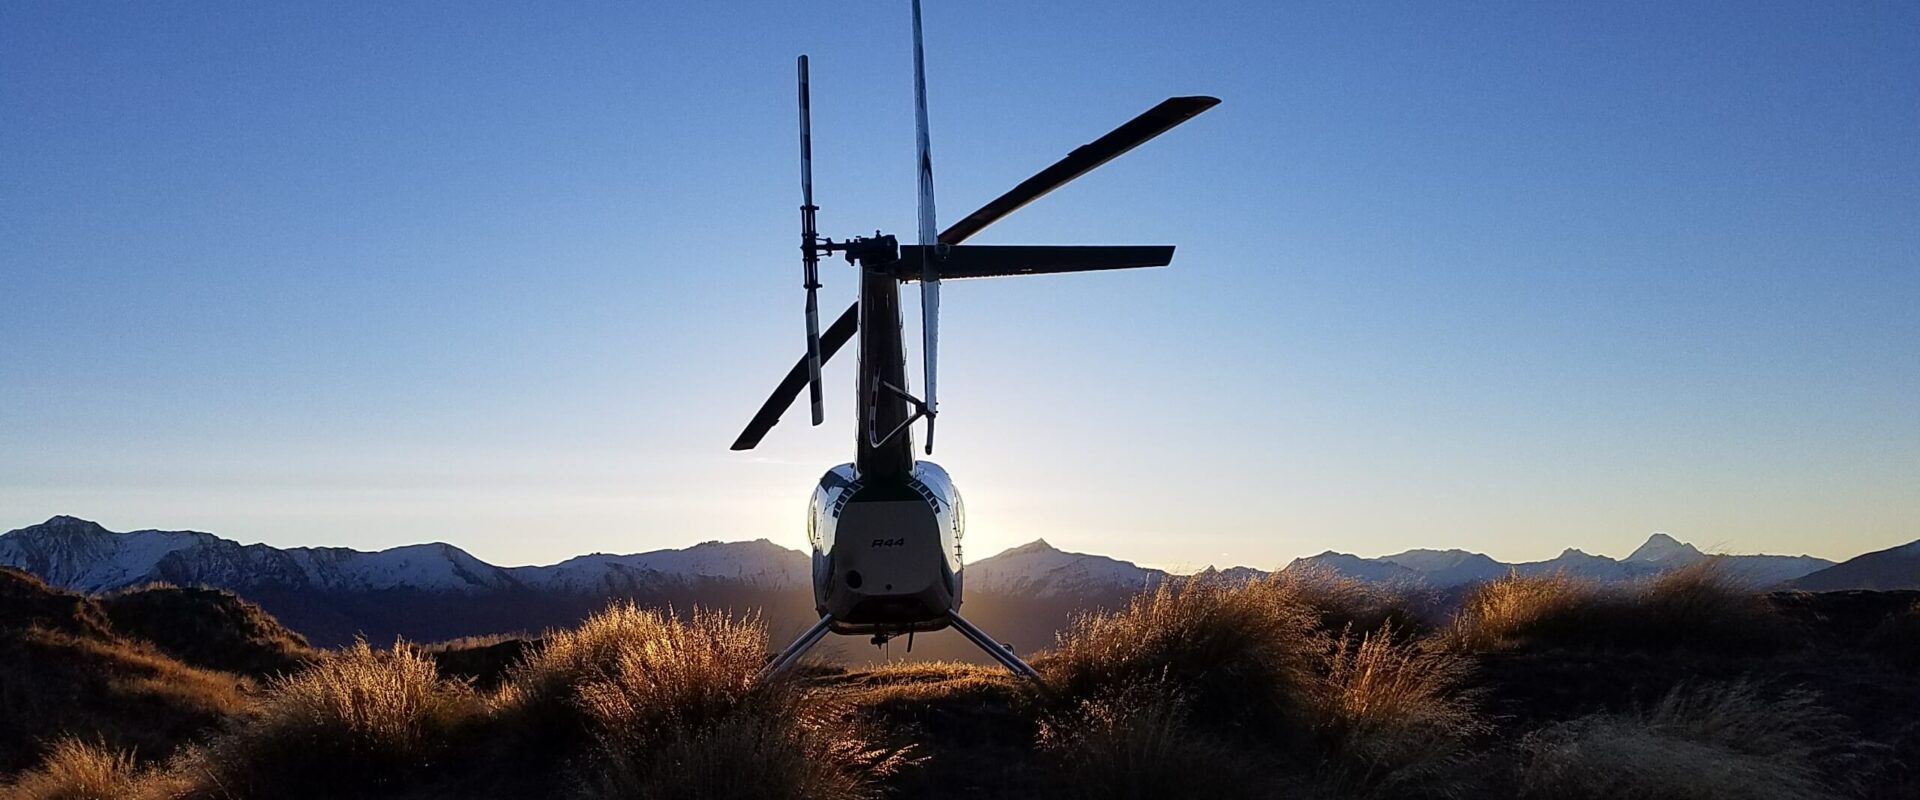 luxury flights wanaka helicopters qualmark